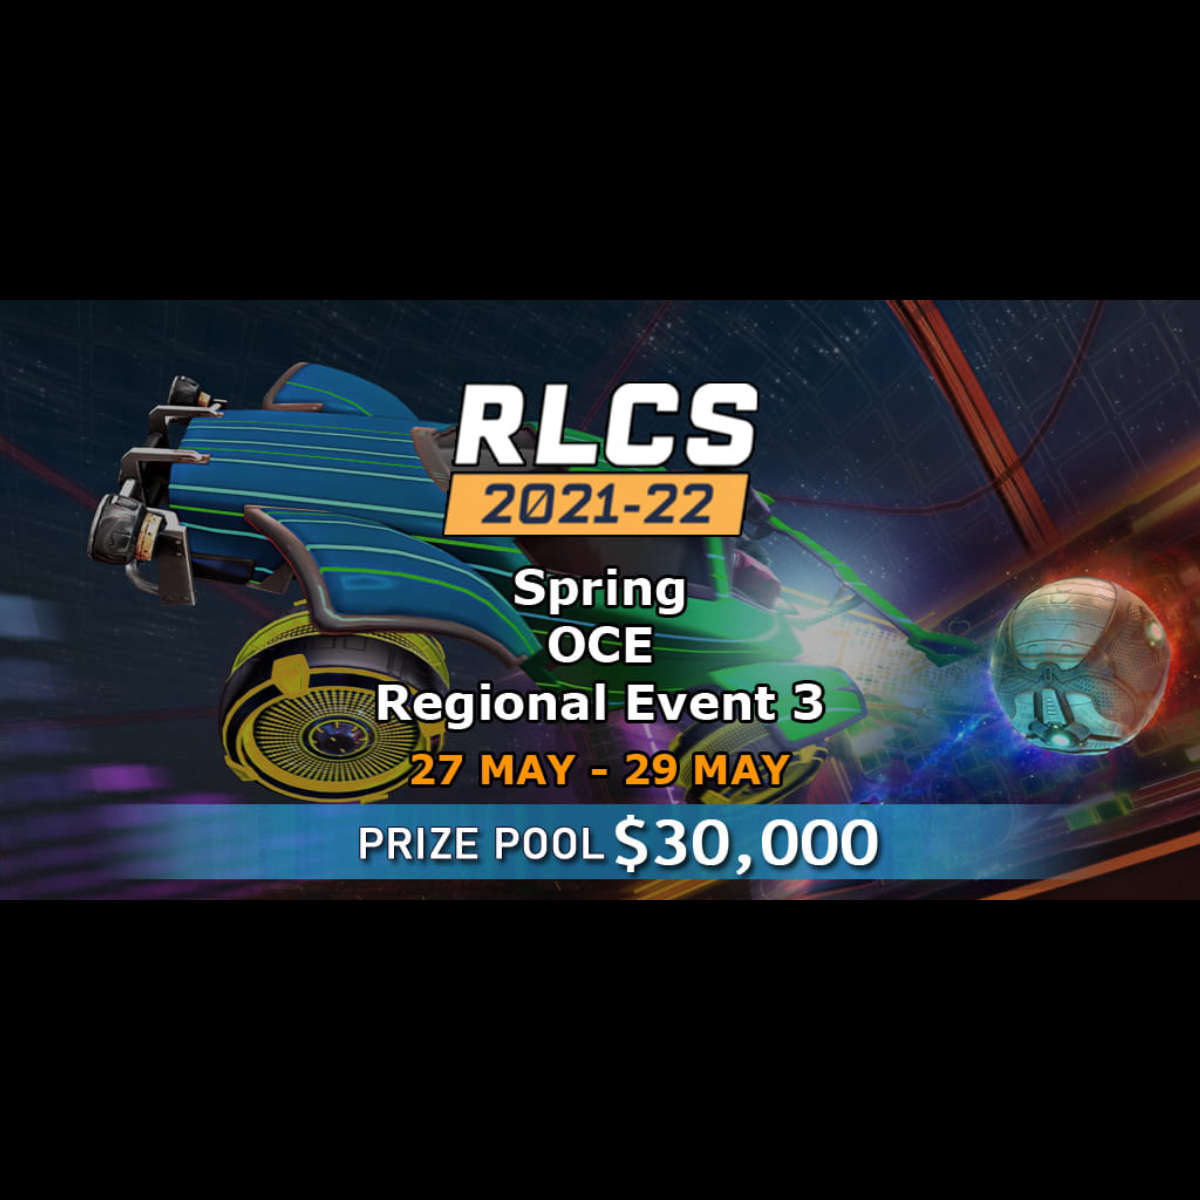 RLCS World Championship 2021-22 Preview